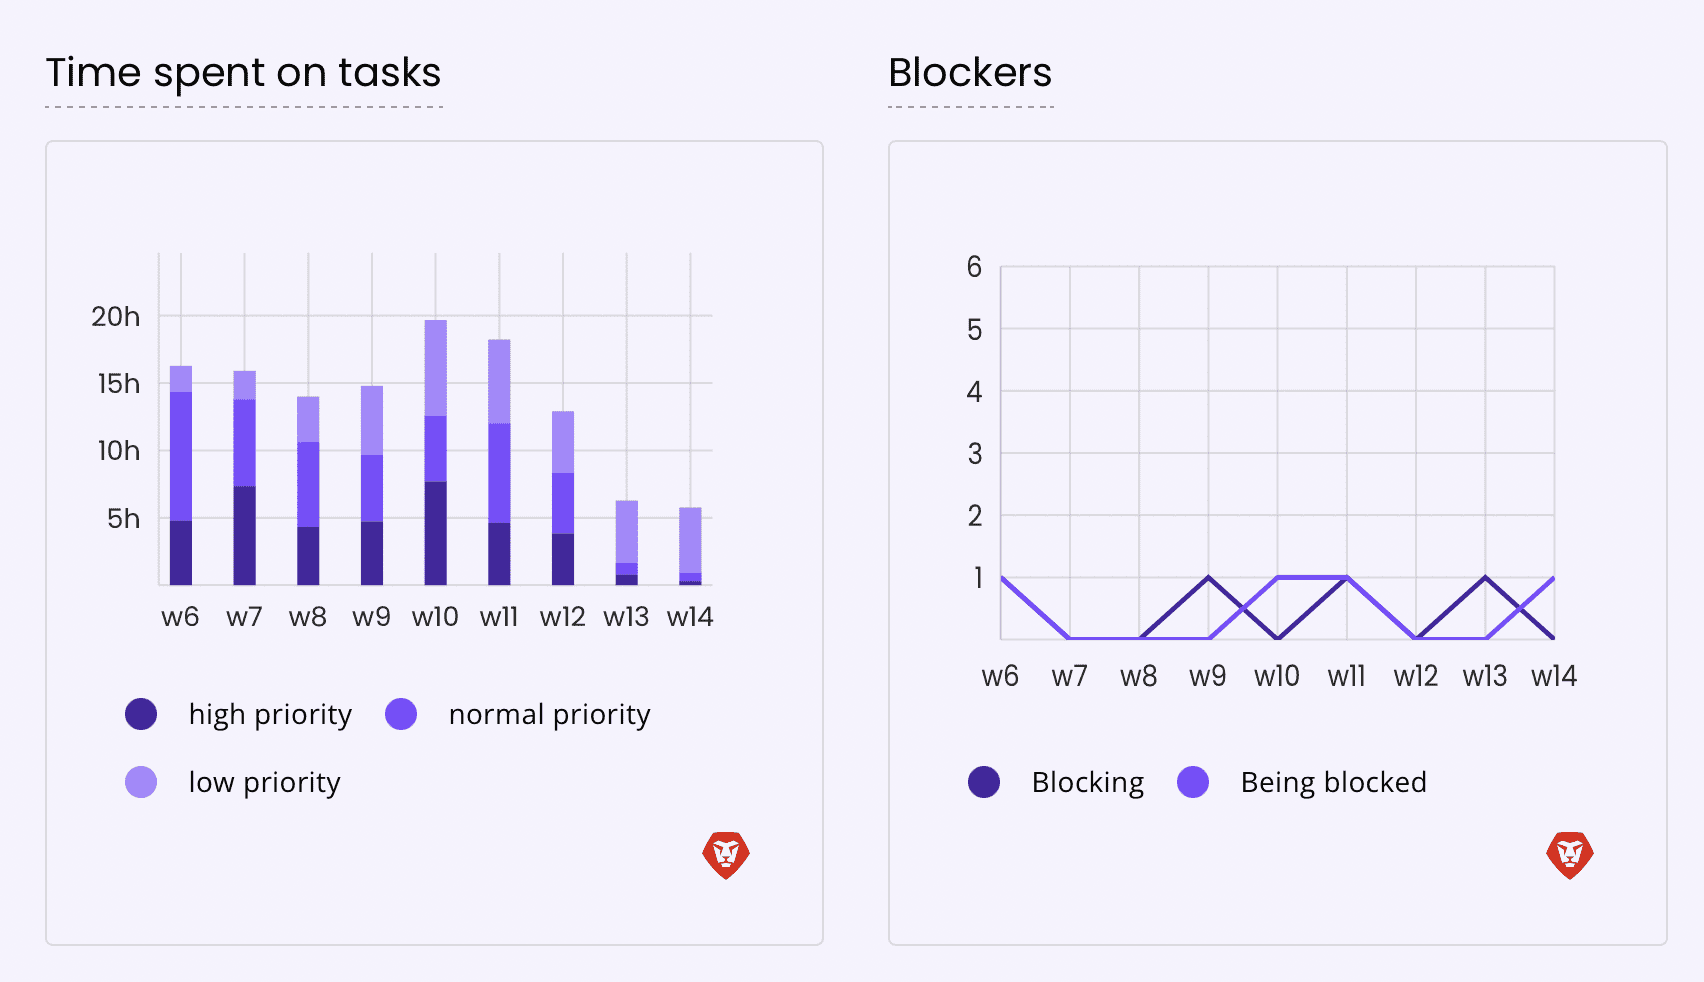 Project Blockers